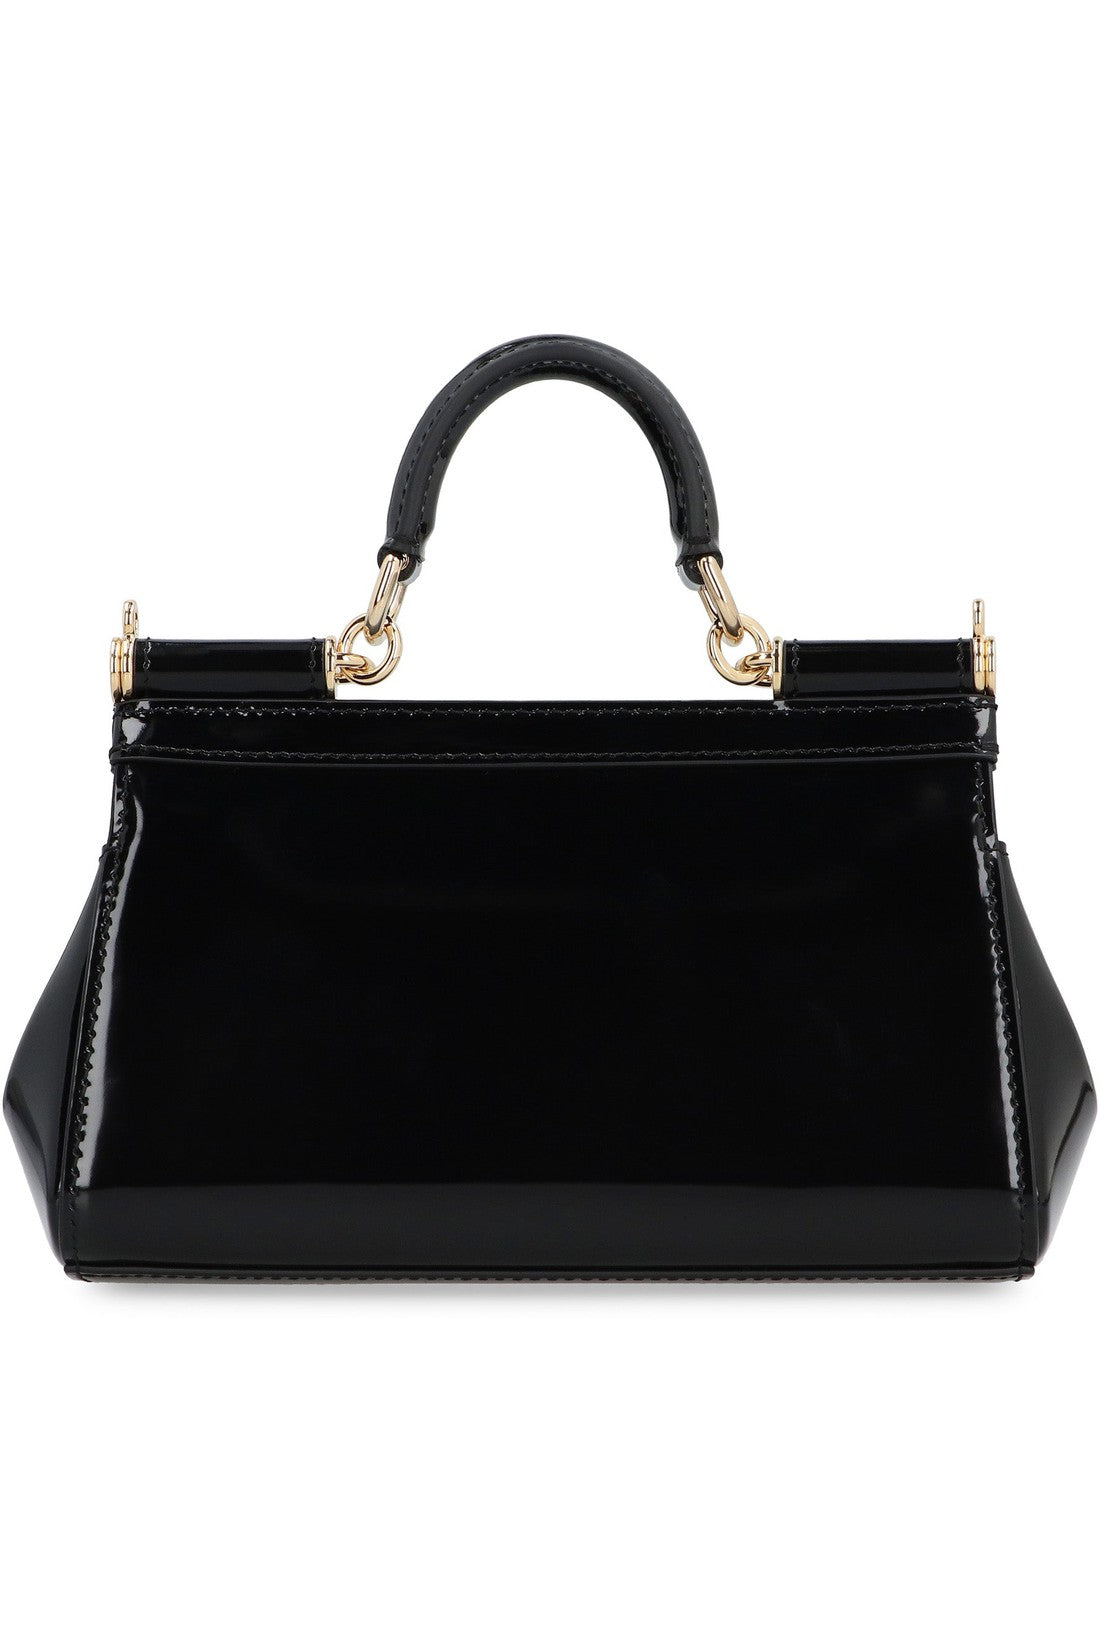 Dolce & Gabbana-OUTLET-SALE-Sicily small leather handbag-ARCHIVIST